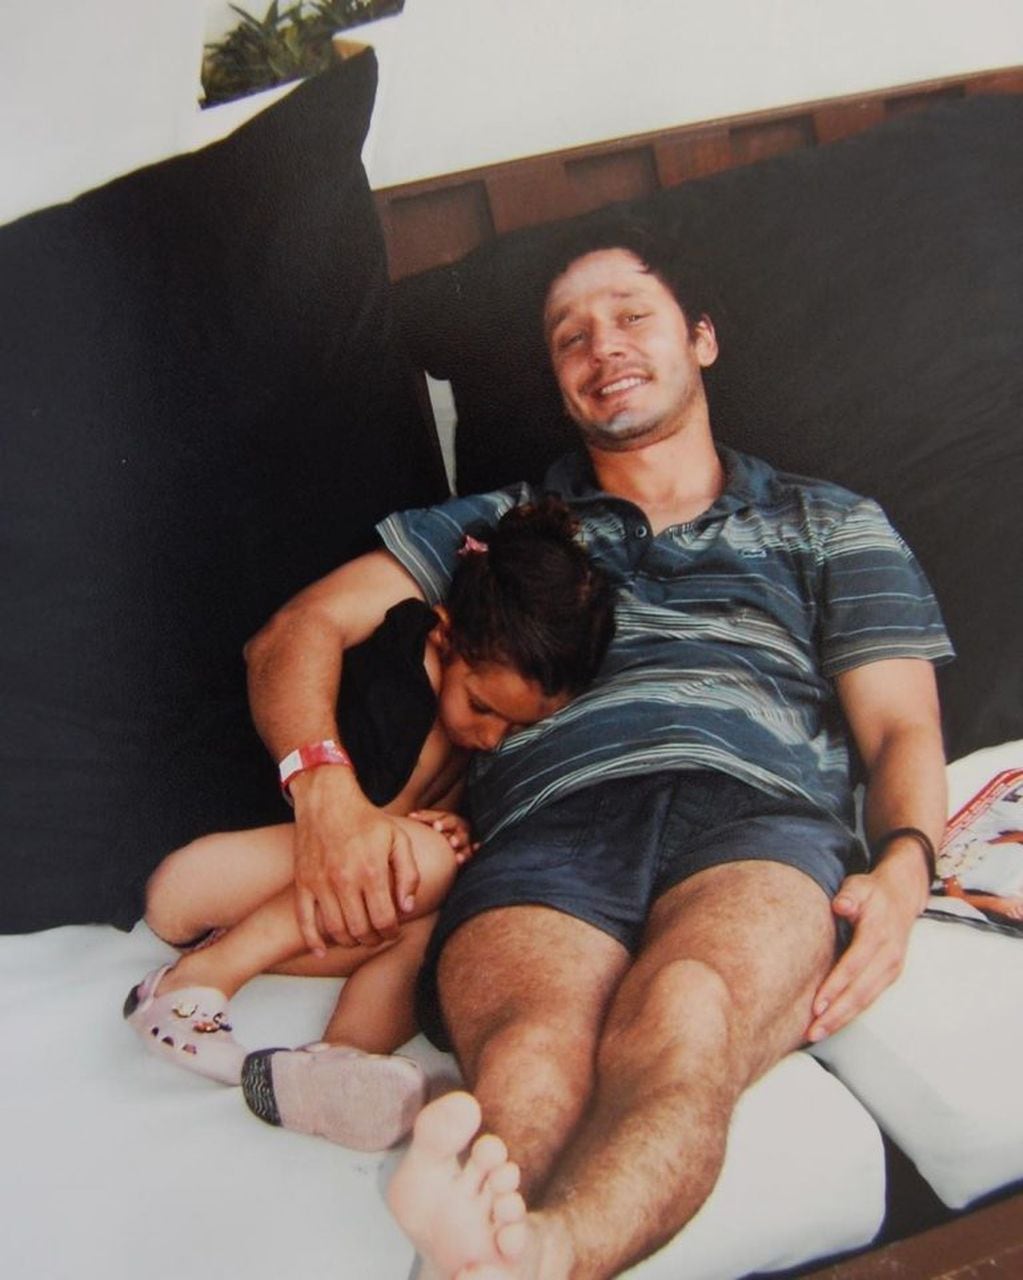 Benajmín Vicuña recordó a su hija Blanca con un emotivo mensaje: "Duerme tranquila mi niña"